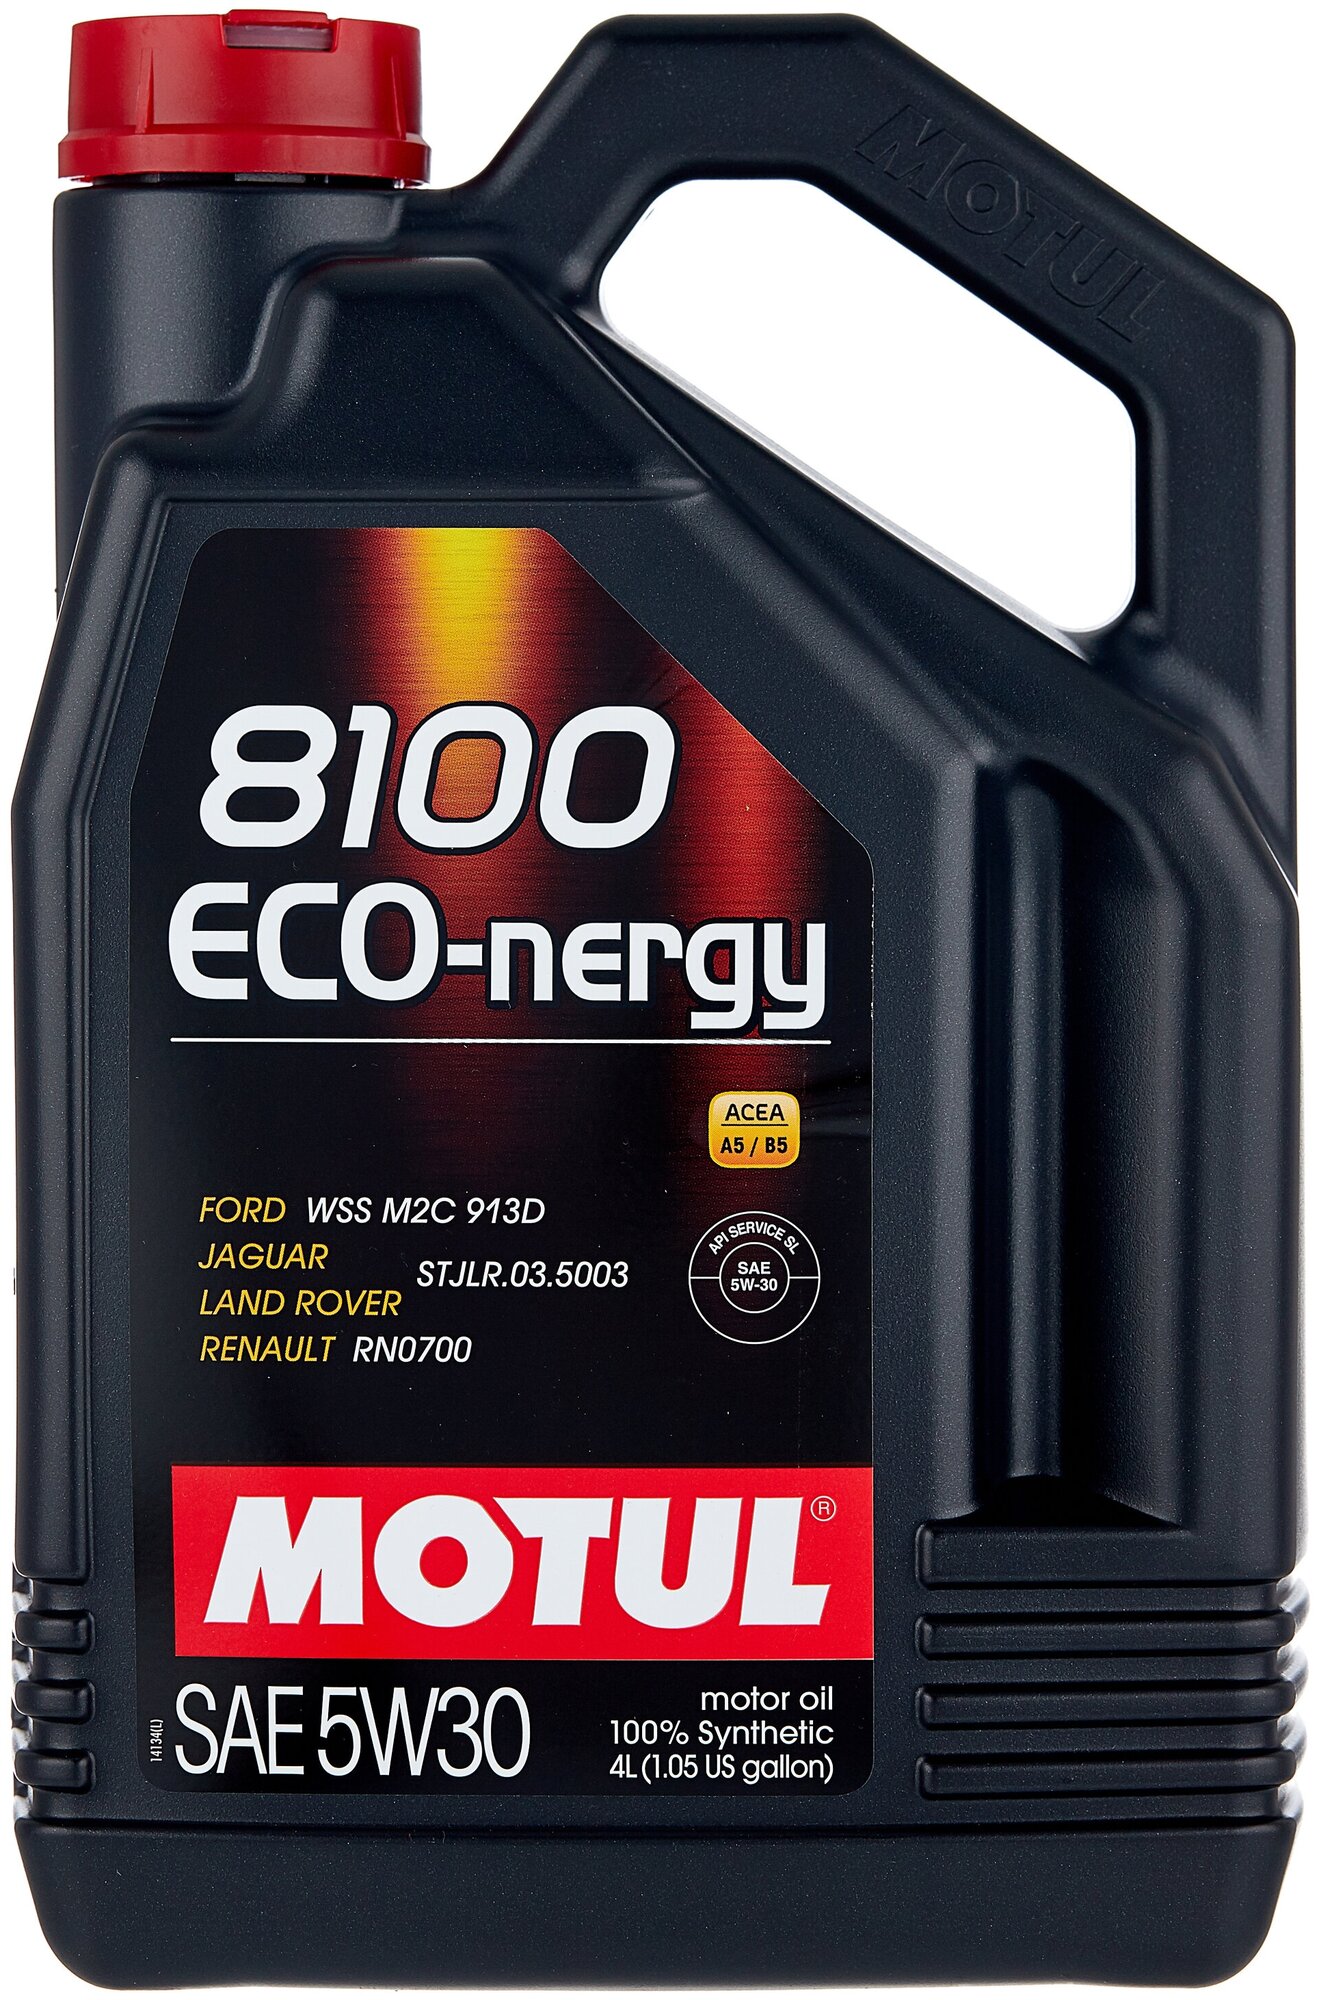 Синтетическое моторное масло Motul 8100 Eco-nergy 5W30, 4 л, 1 шт.